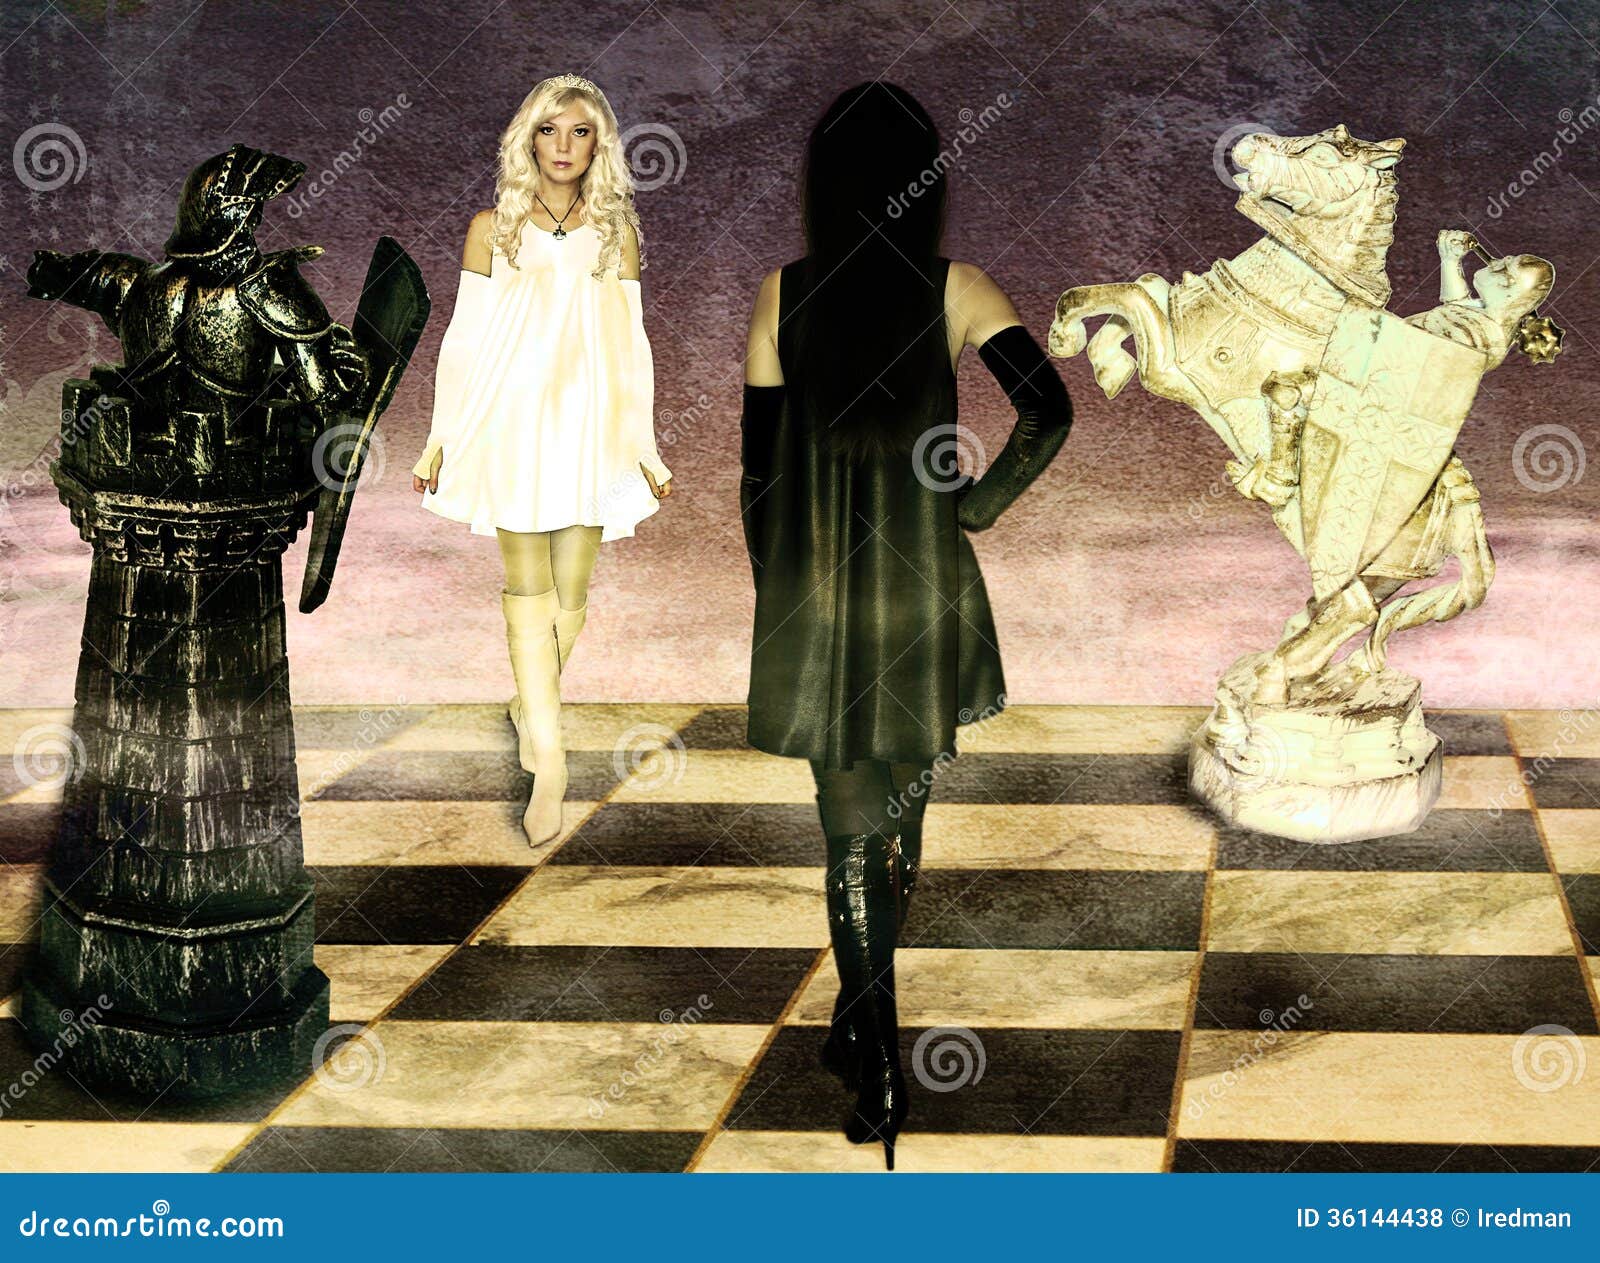 На шахматной доске осталось 5. Королева на шахматной доске. Женщина Королева на шахматной доске. Ферзь девушка на шахматной доске. Место королевы на шахматной доске.